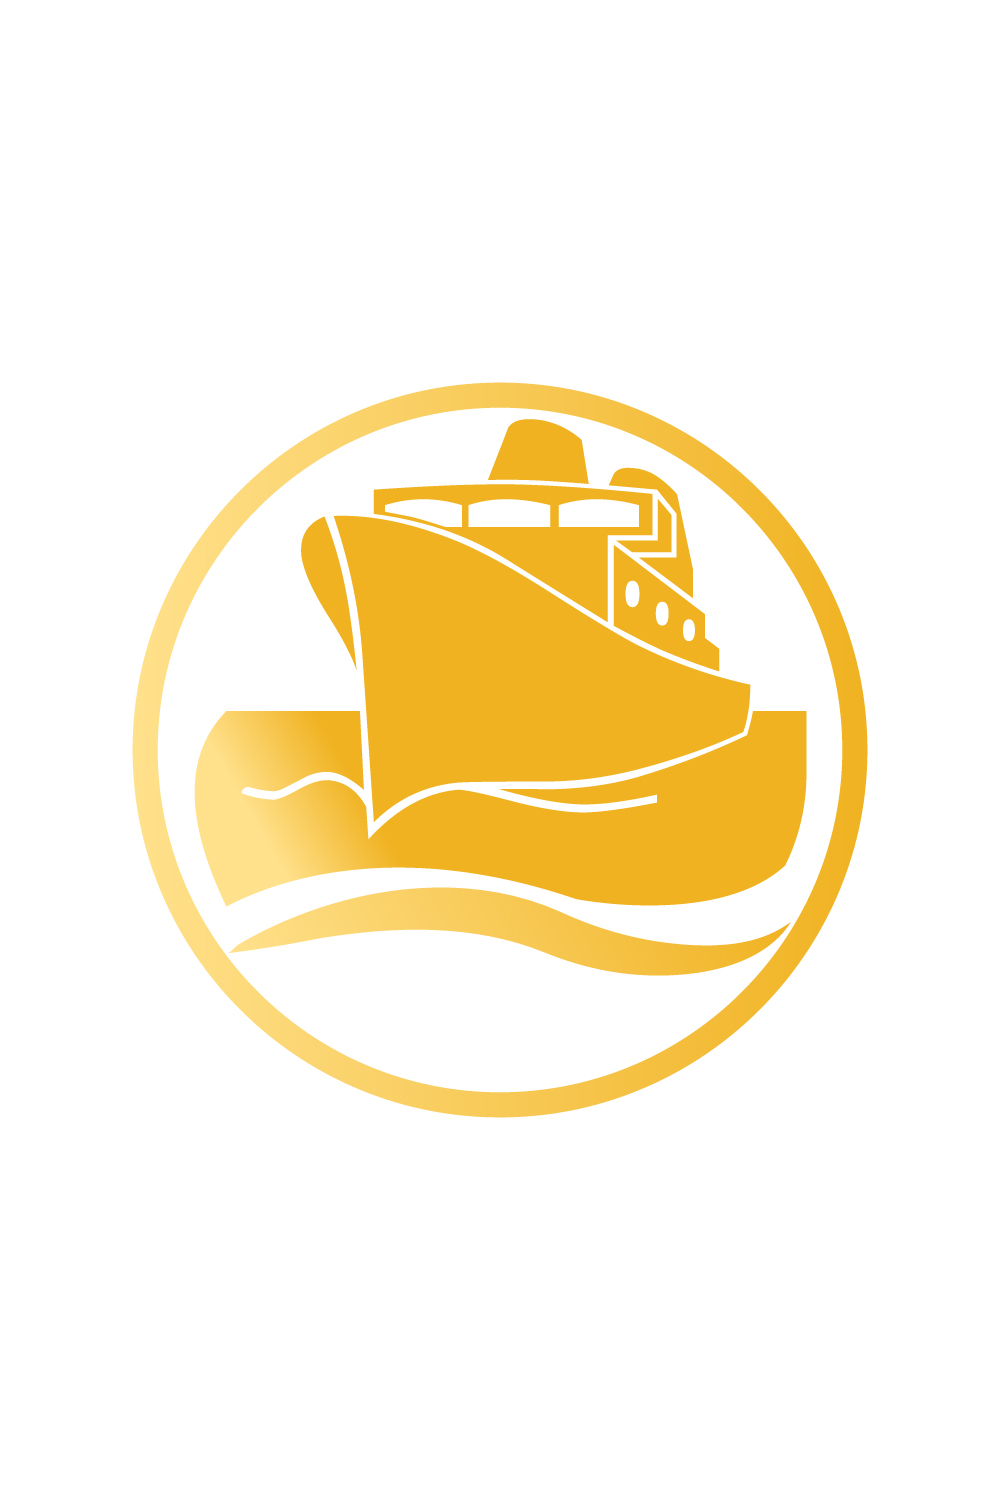 Luxury Shipping logo design vector images Ship logo and Transport logo design Travelling logo design Premium vector illustration Luxury property Business logo design pinterest preview image.